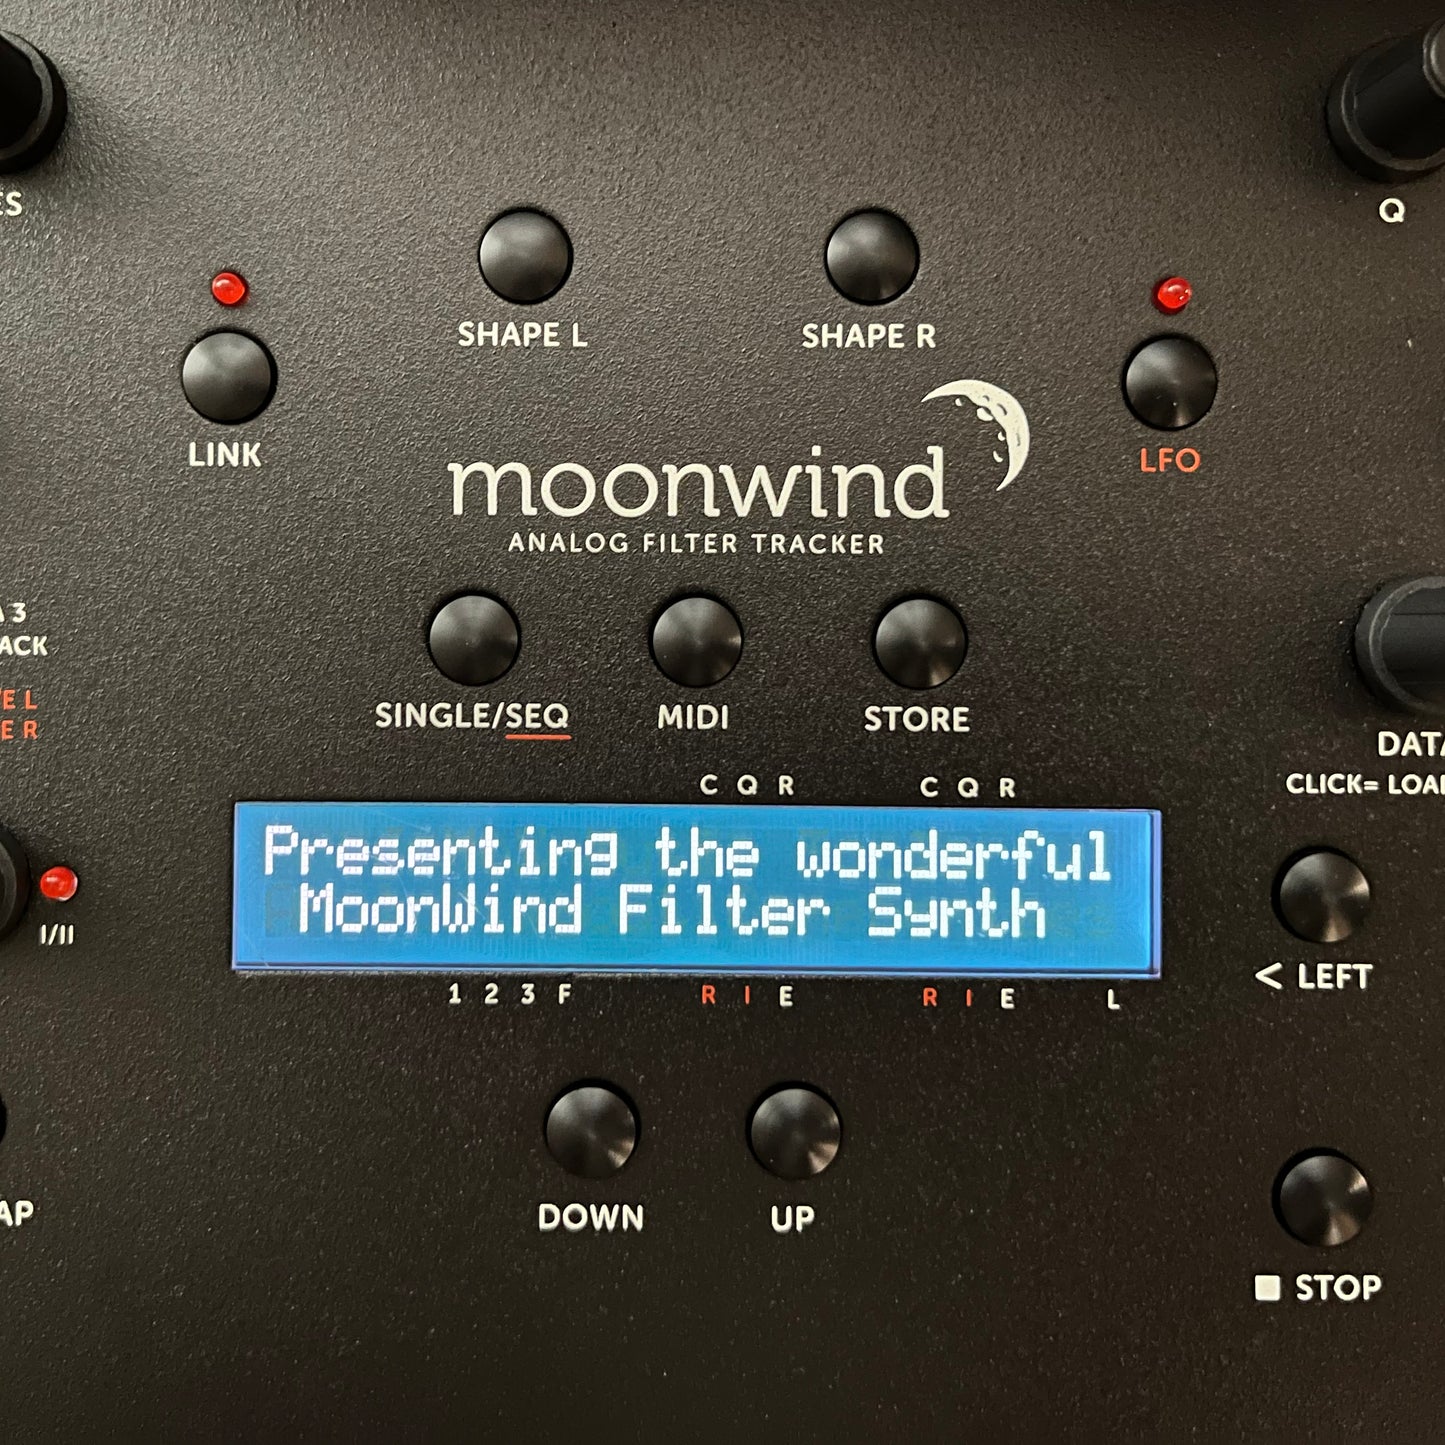 Moonwind Analog Filter Tracker, Mint